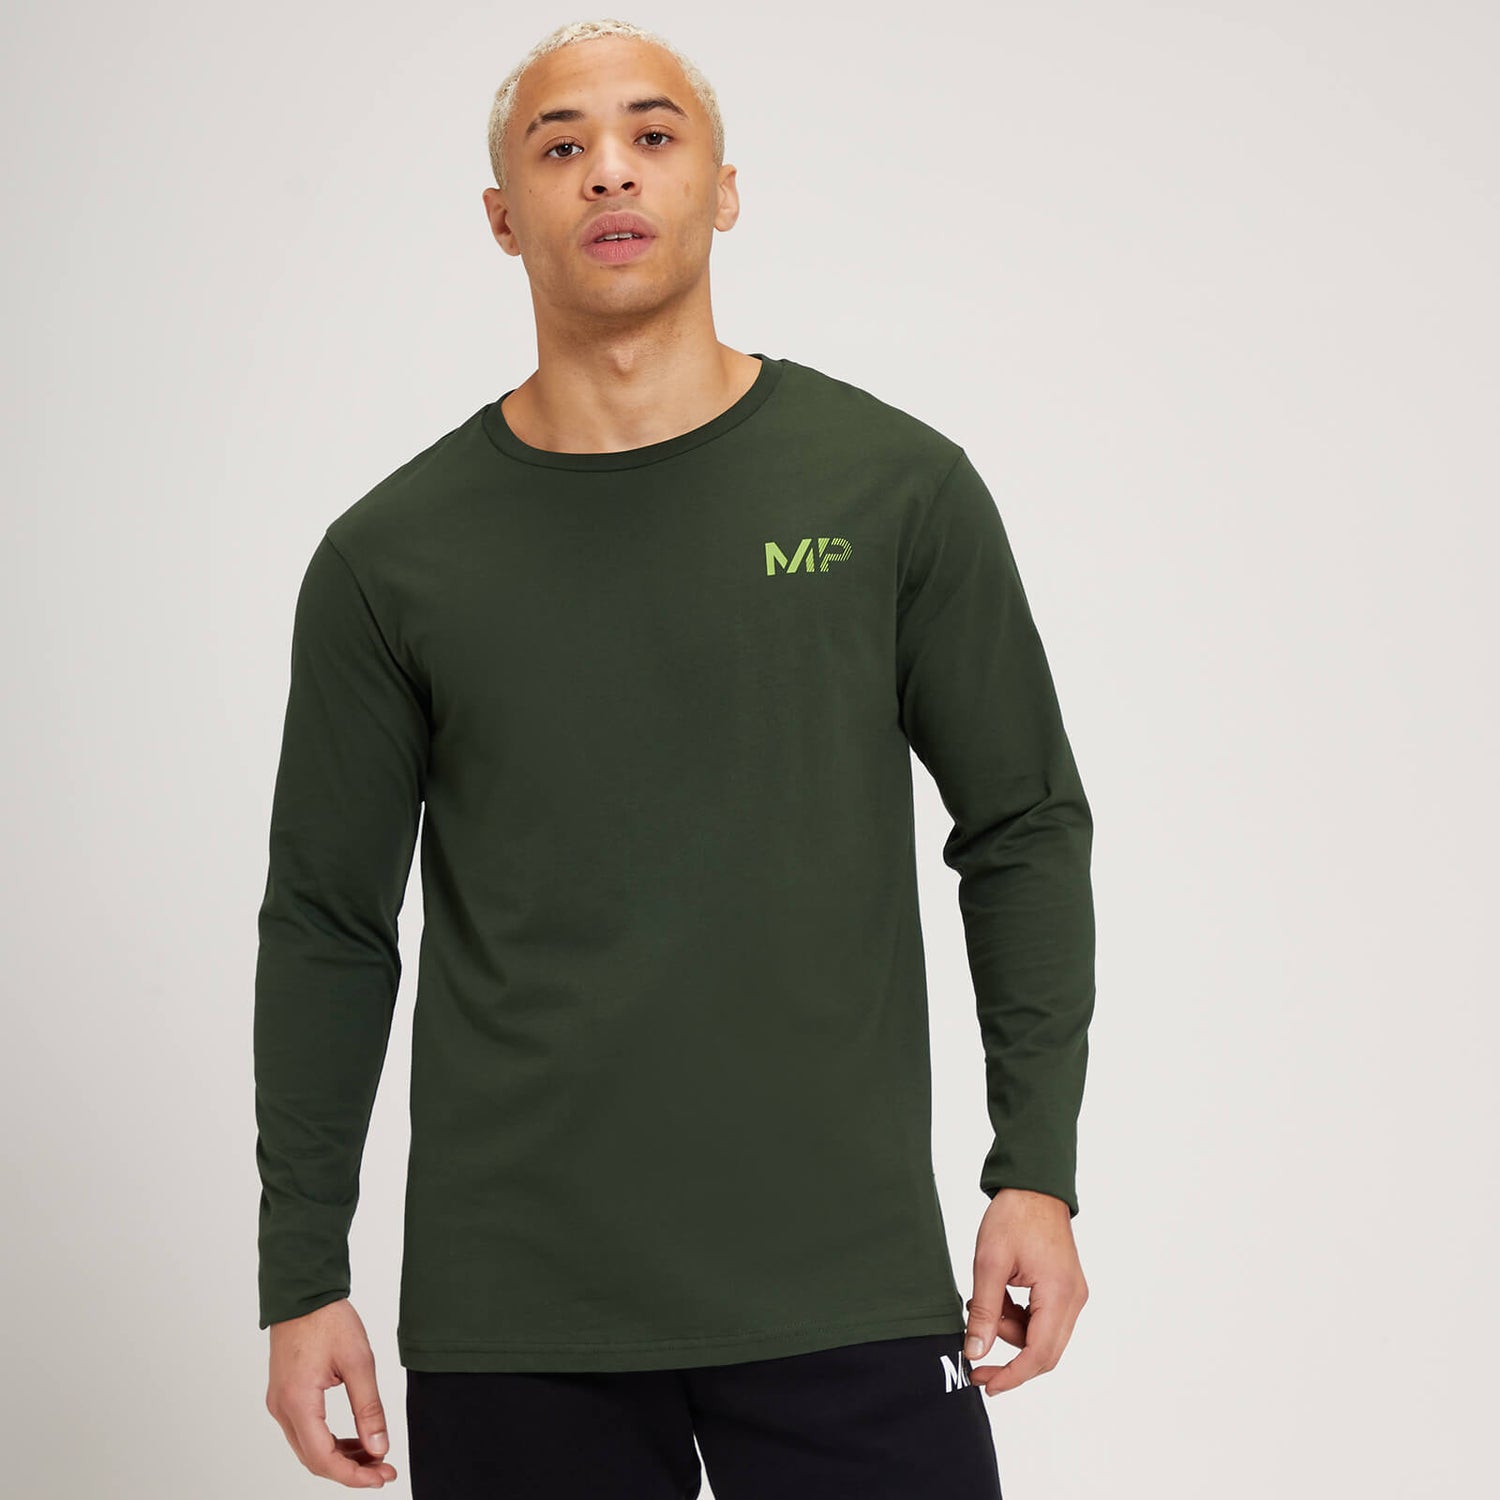 Camiseta de manga larga con estampado gráfico gradual para hombre de MP - Verde oscuro - XS